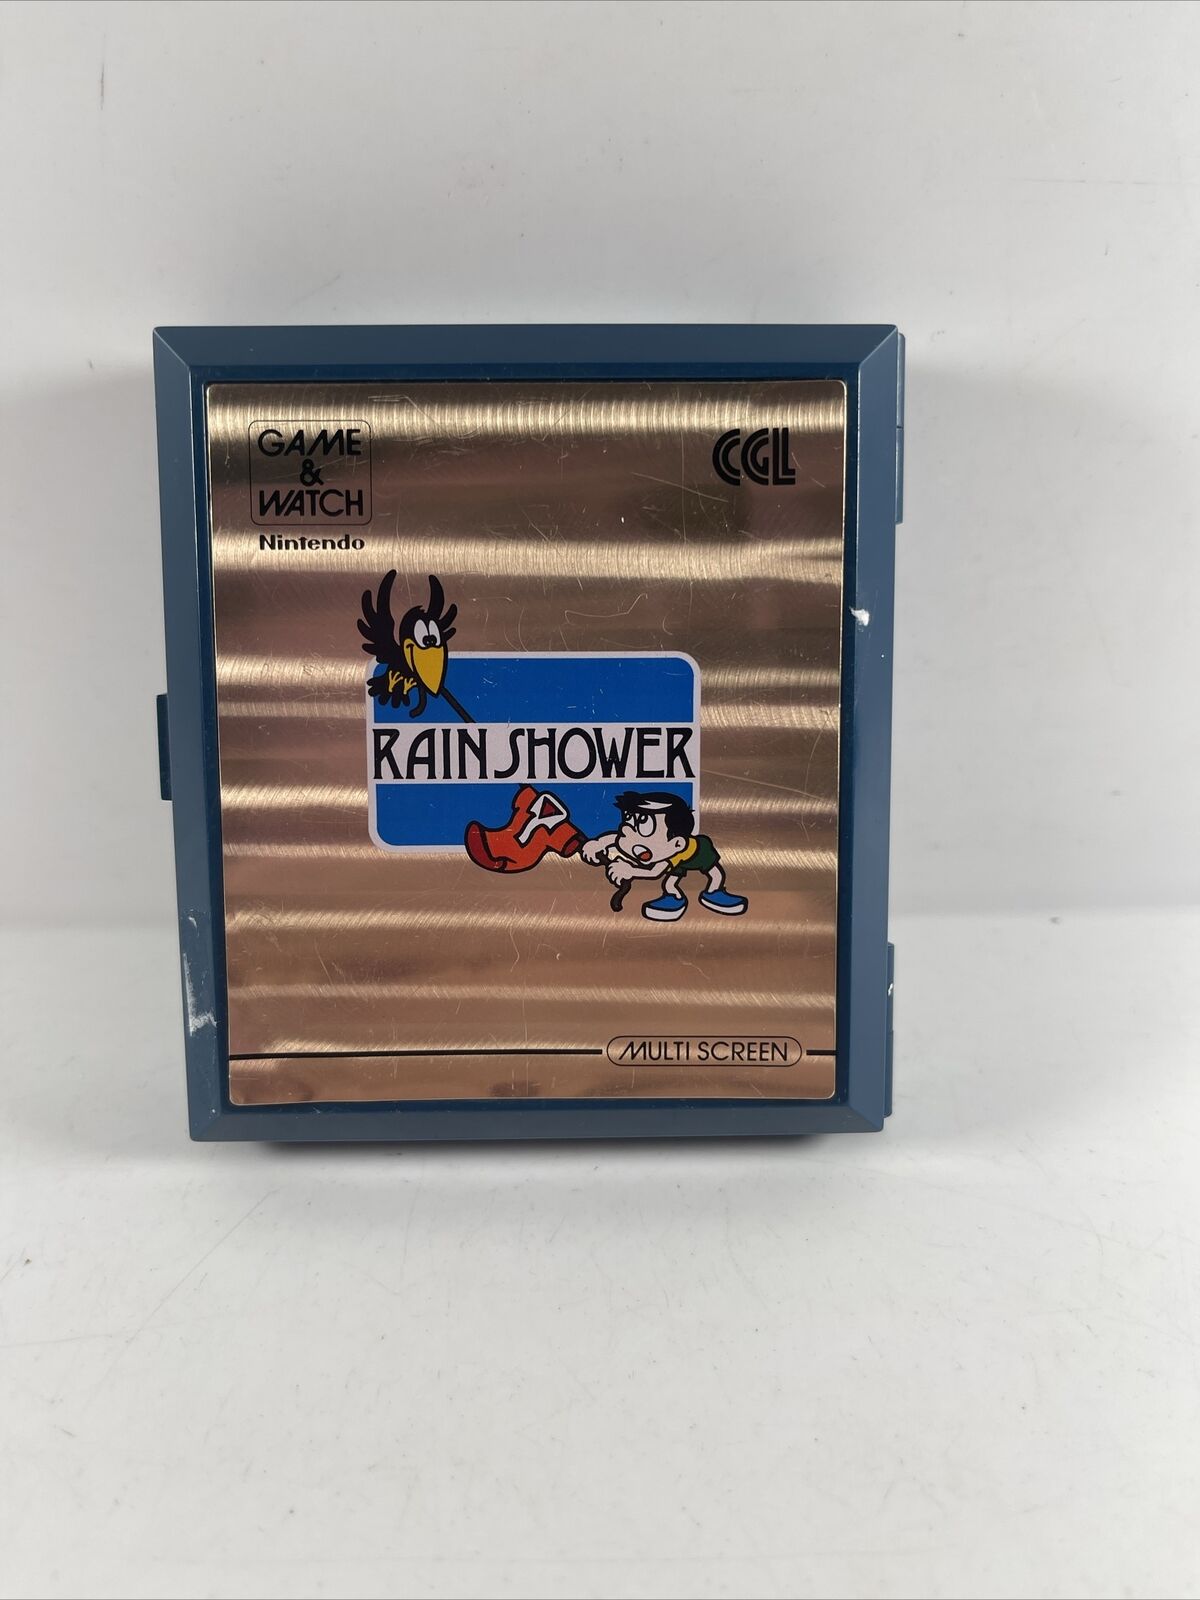 NINTENDO GAME & WATCH RAINSHOWER LP-57 1983 WORKING Please Read